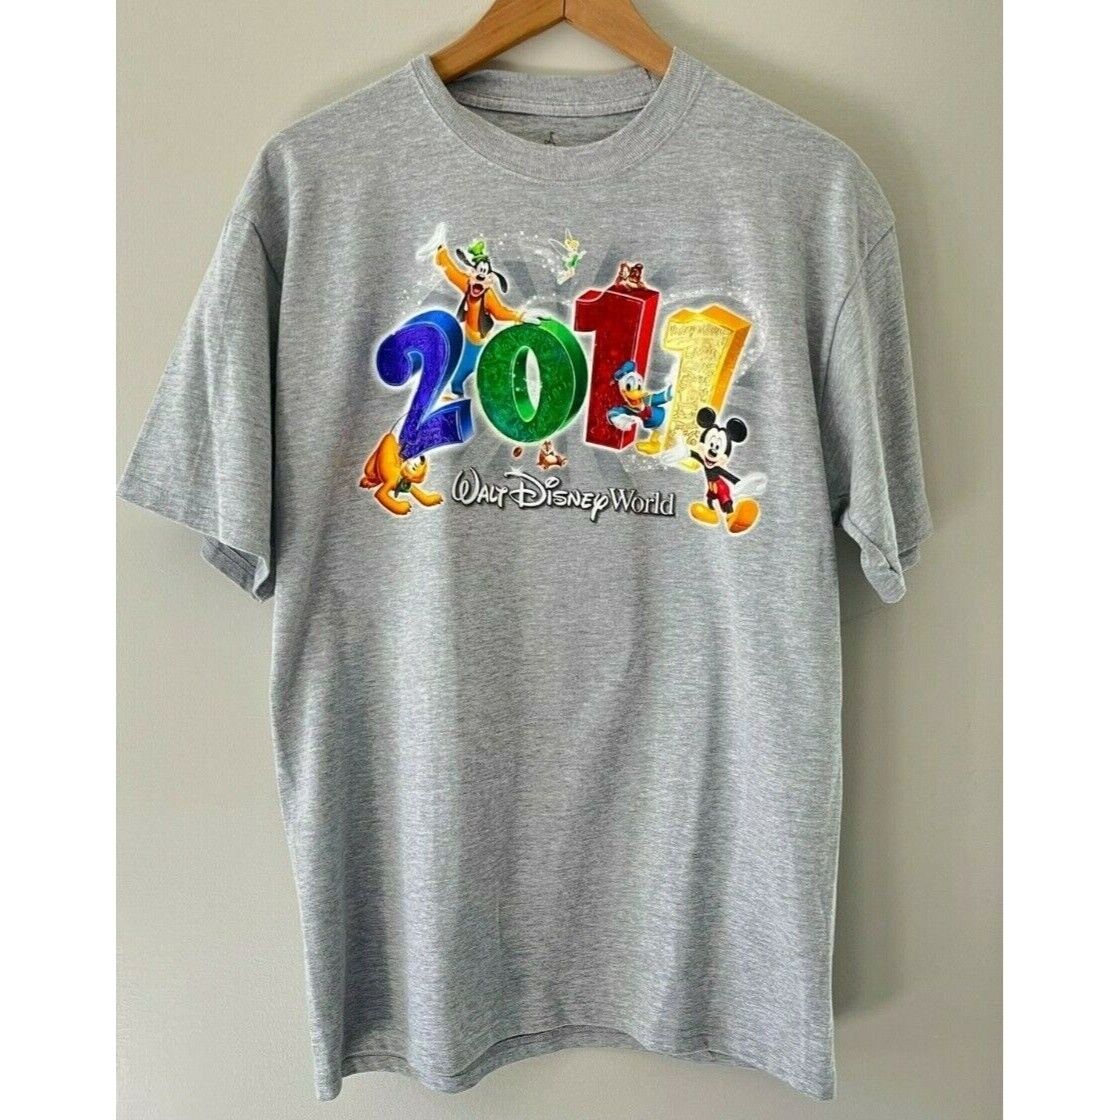 LKNEW Disney World T Shirt Adult Disneyland 2011 Medium gray metallic numbers